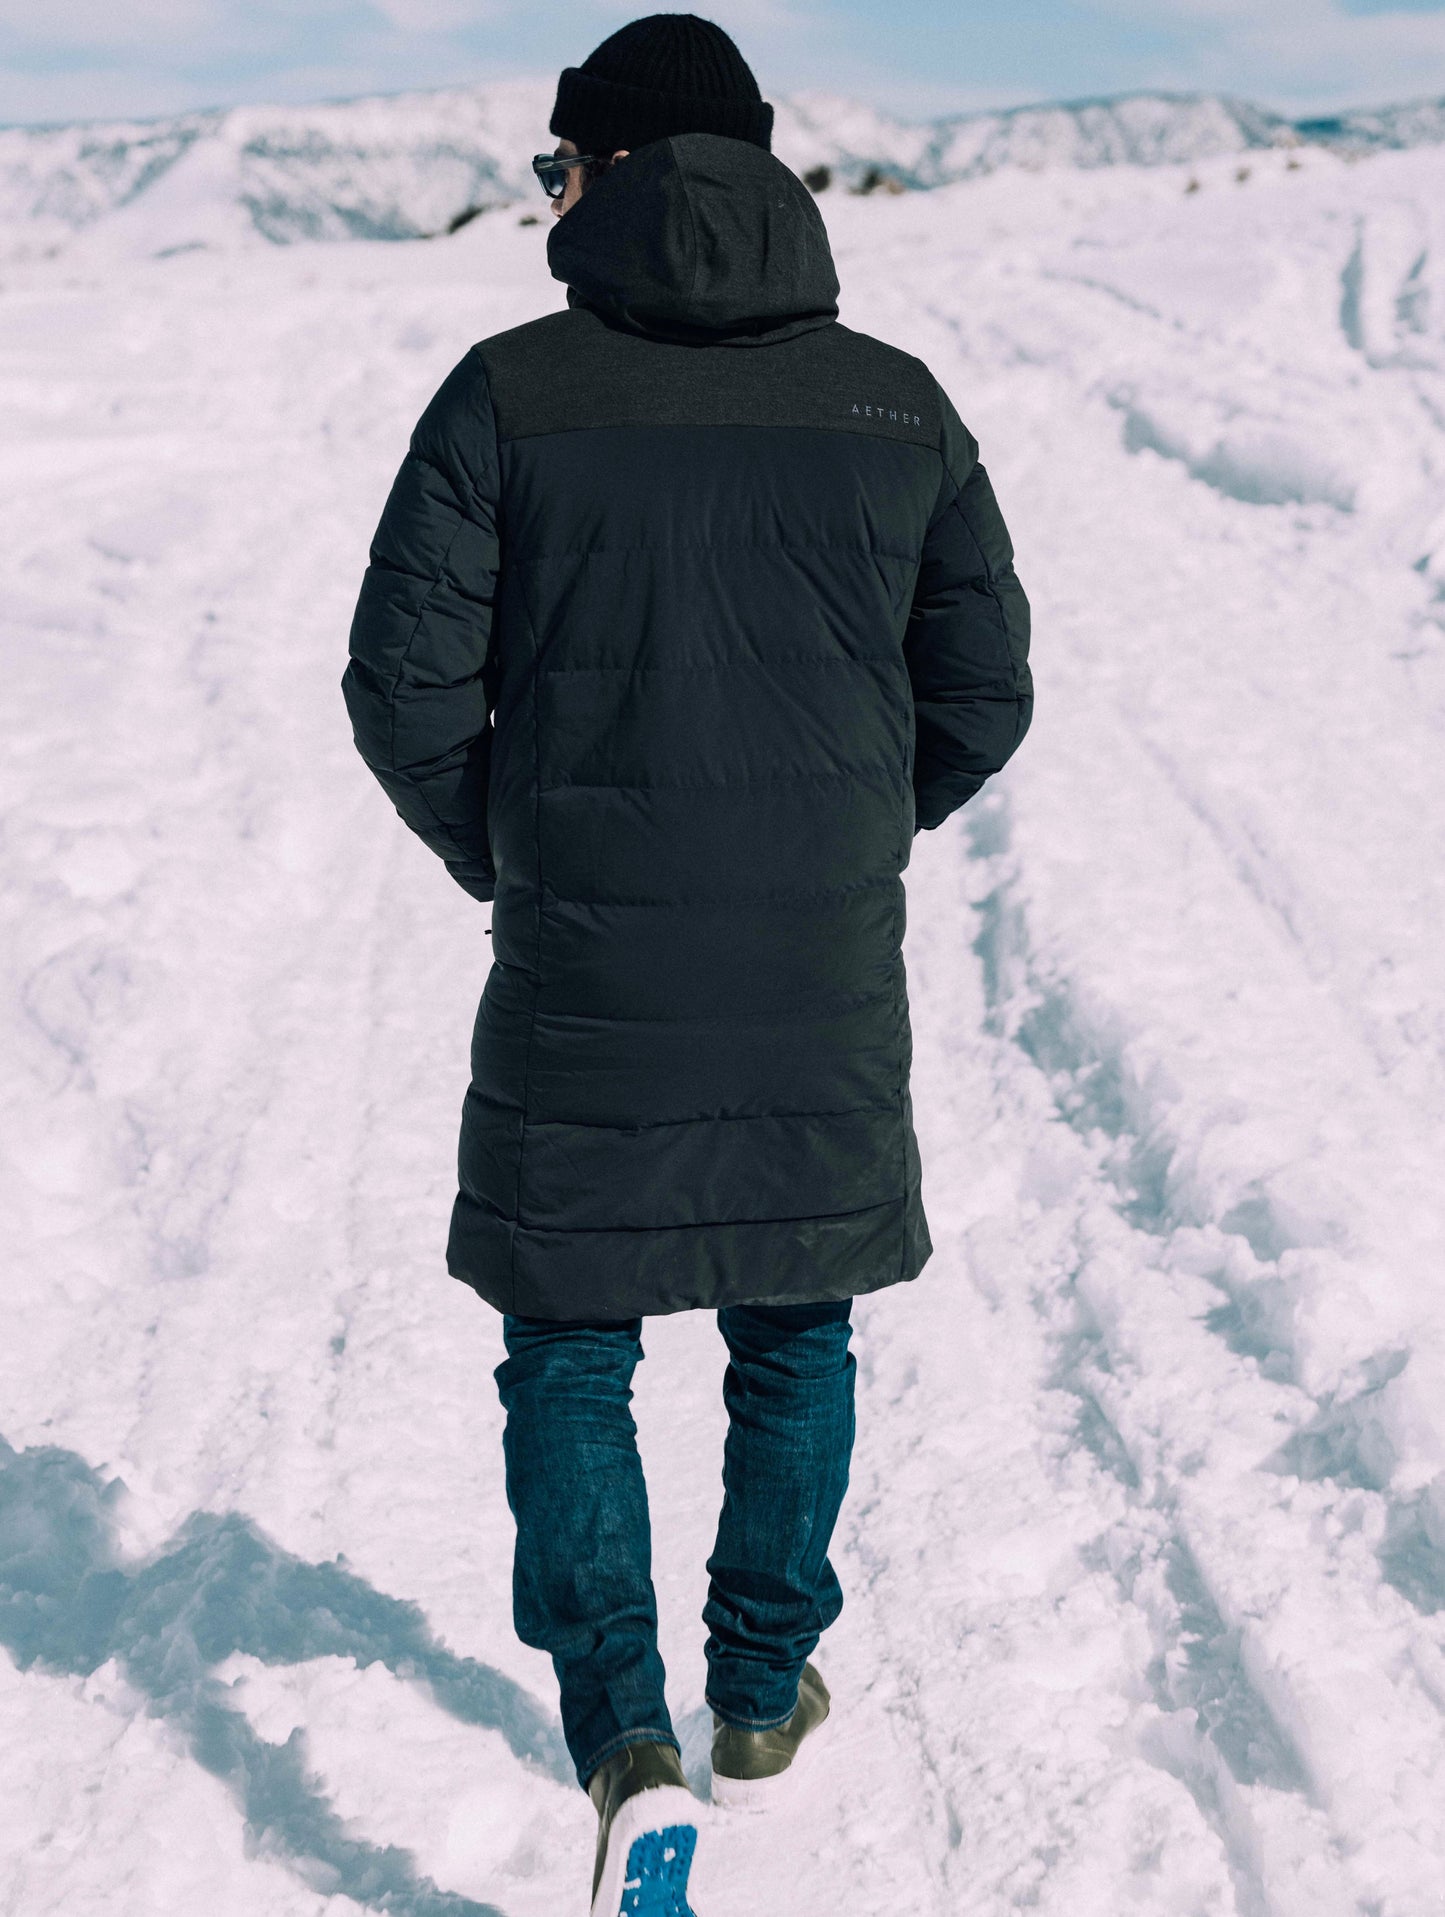 man wearing black parka in snow